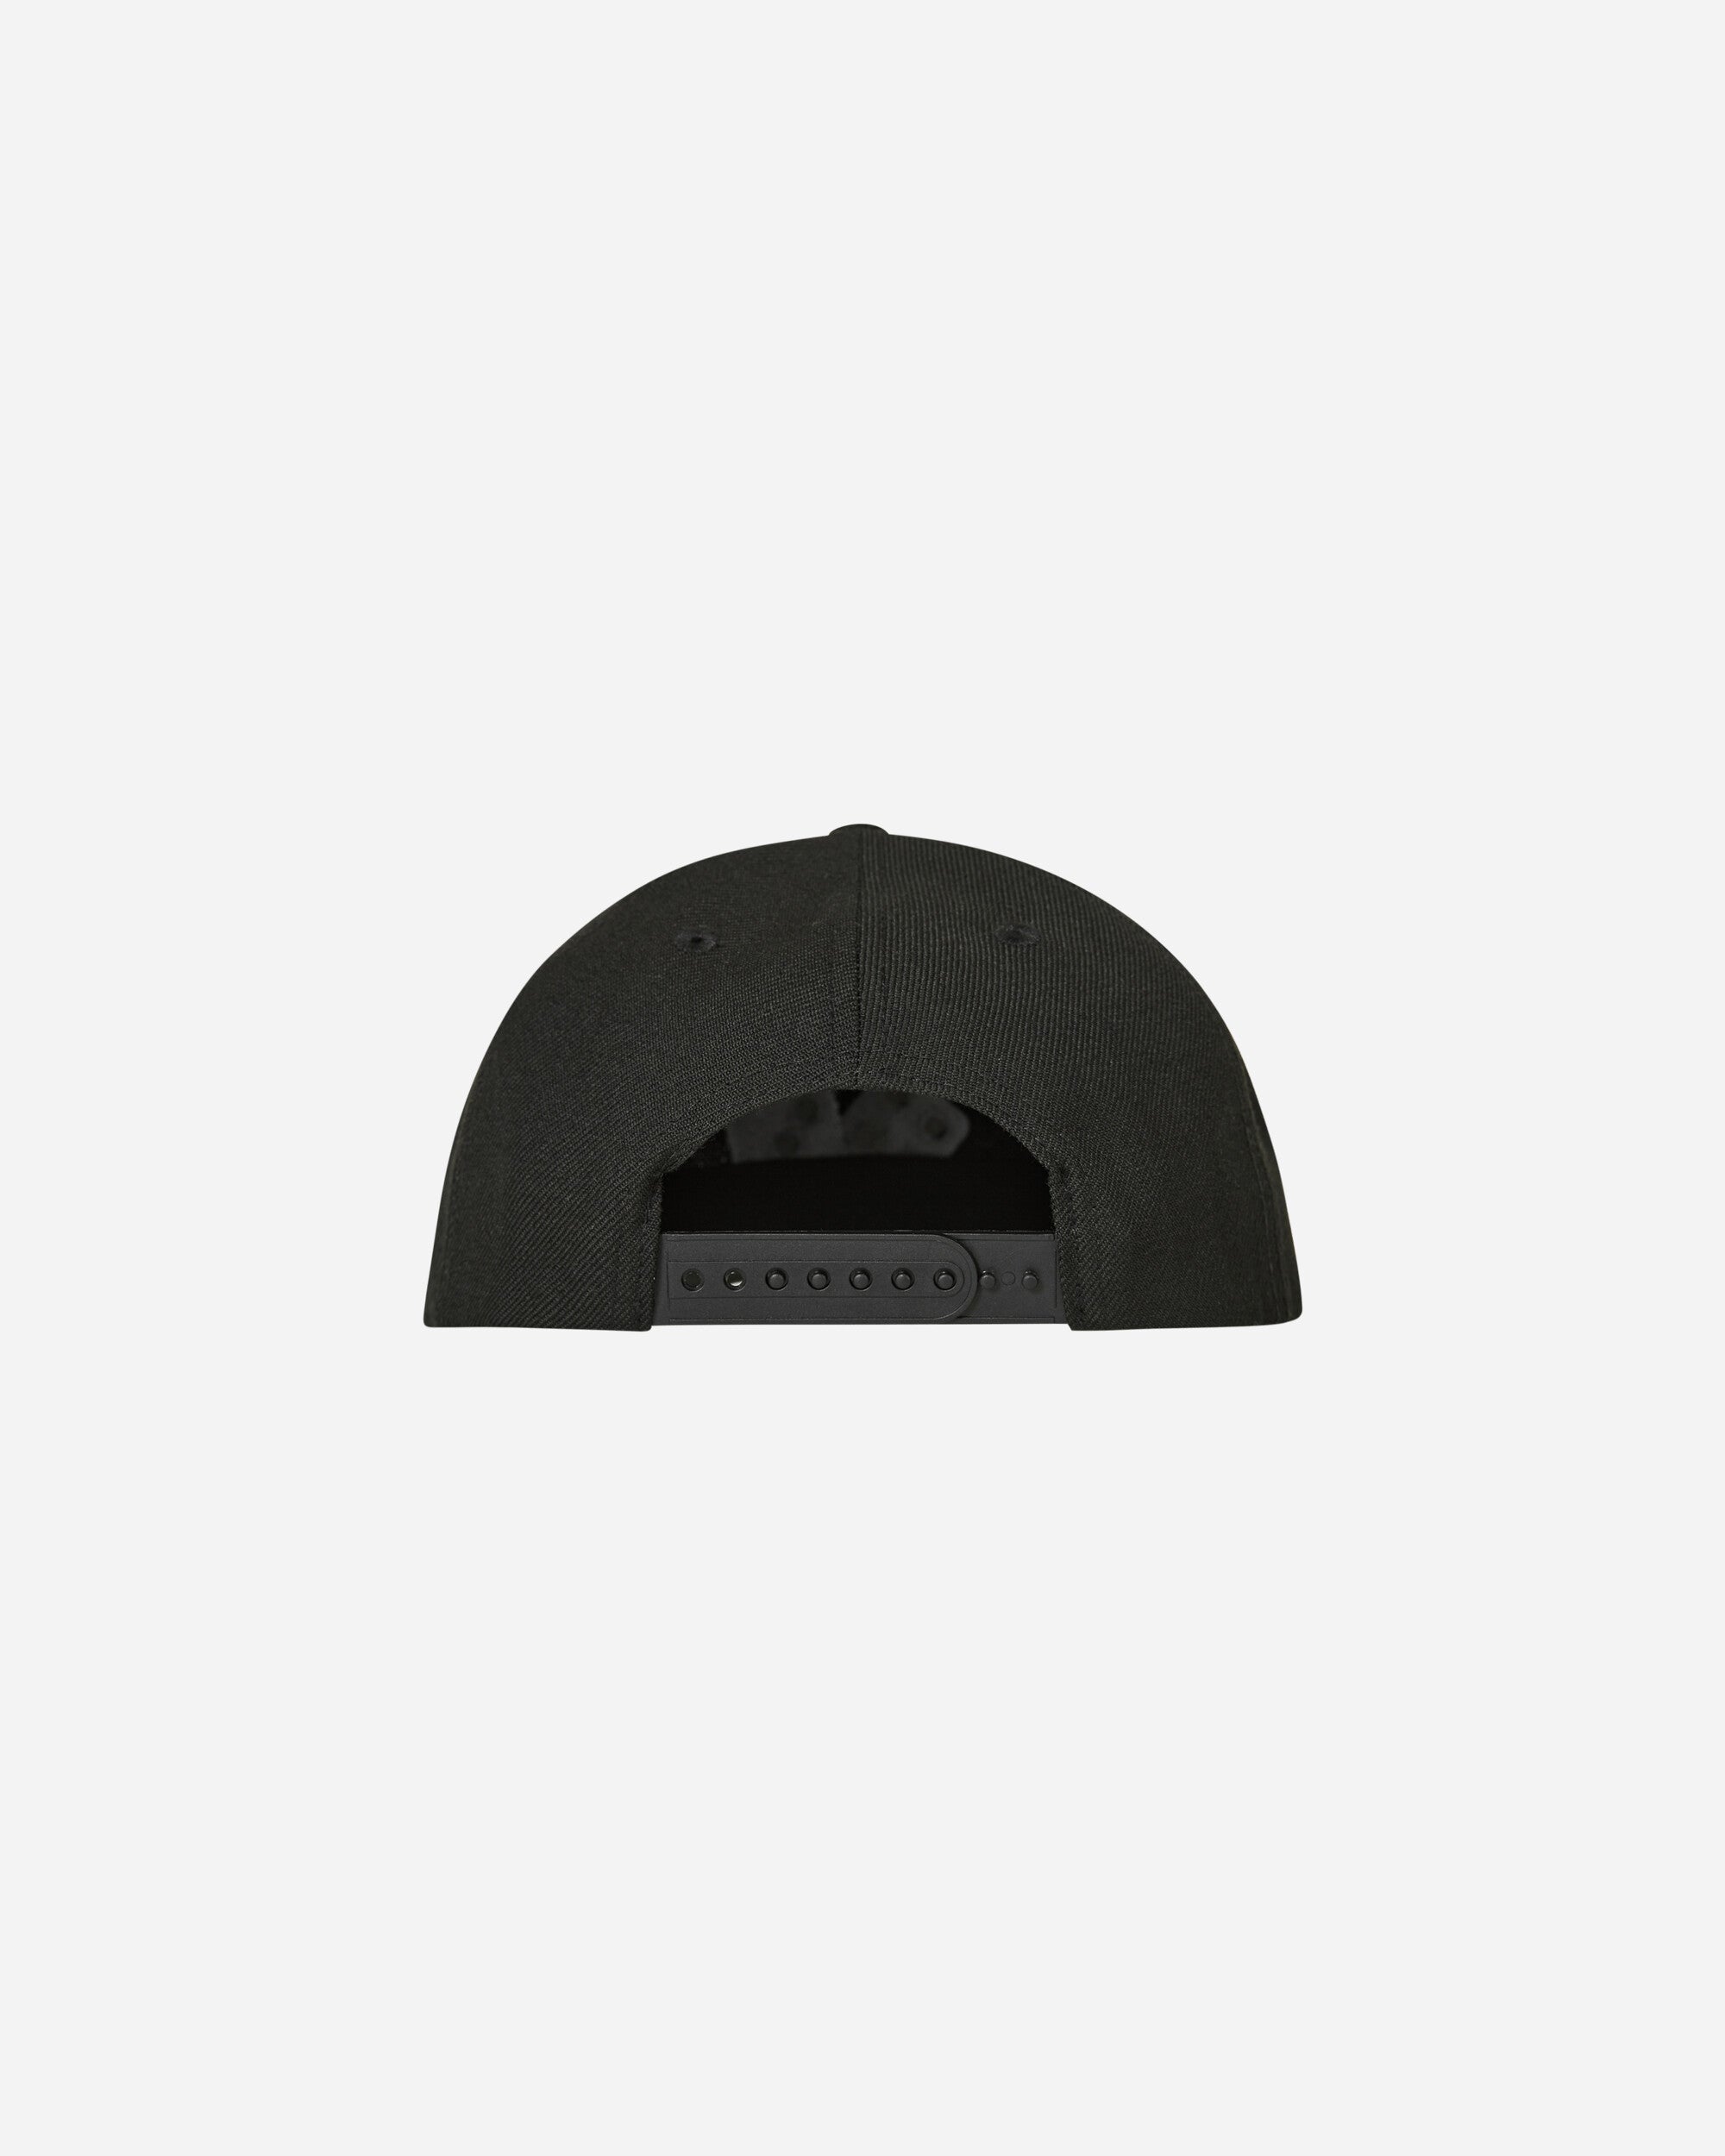 Stüssy Stock Dice Low Pro Cap Black Hats Caps 1311136 0001